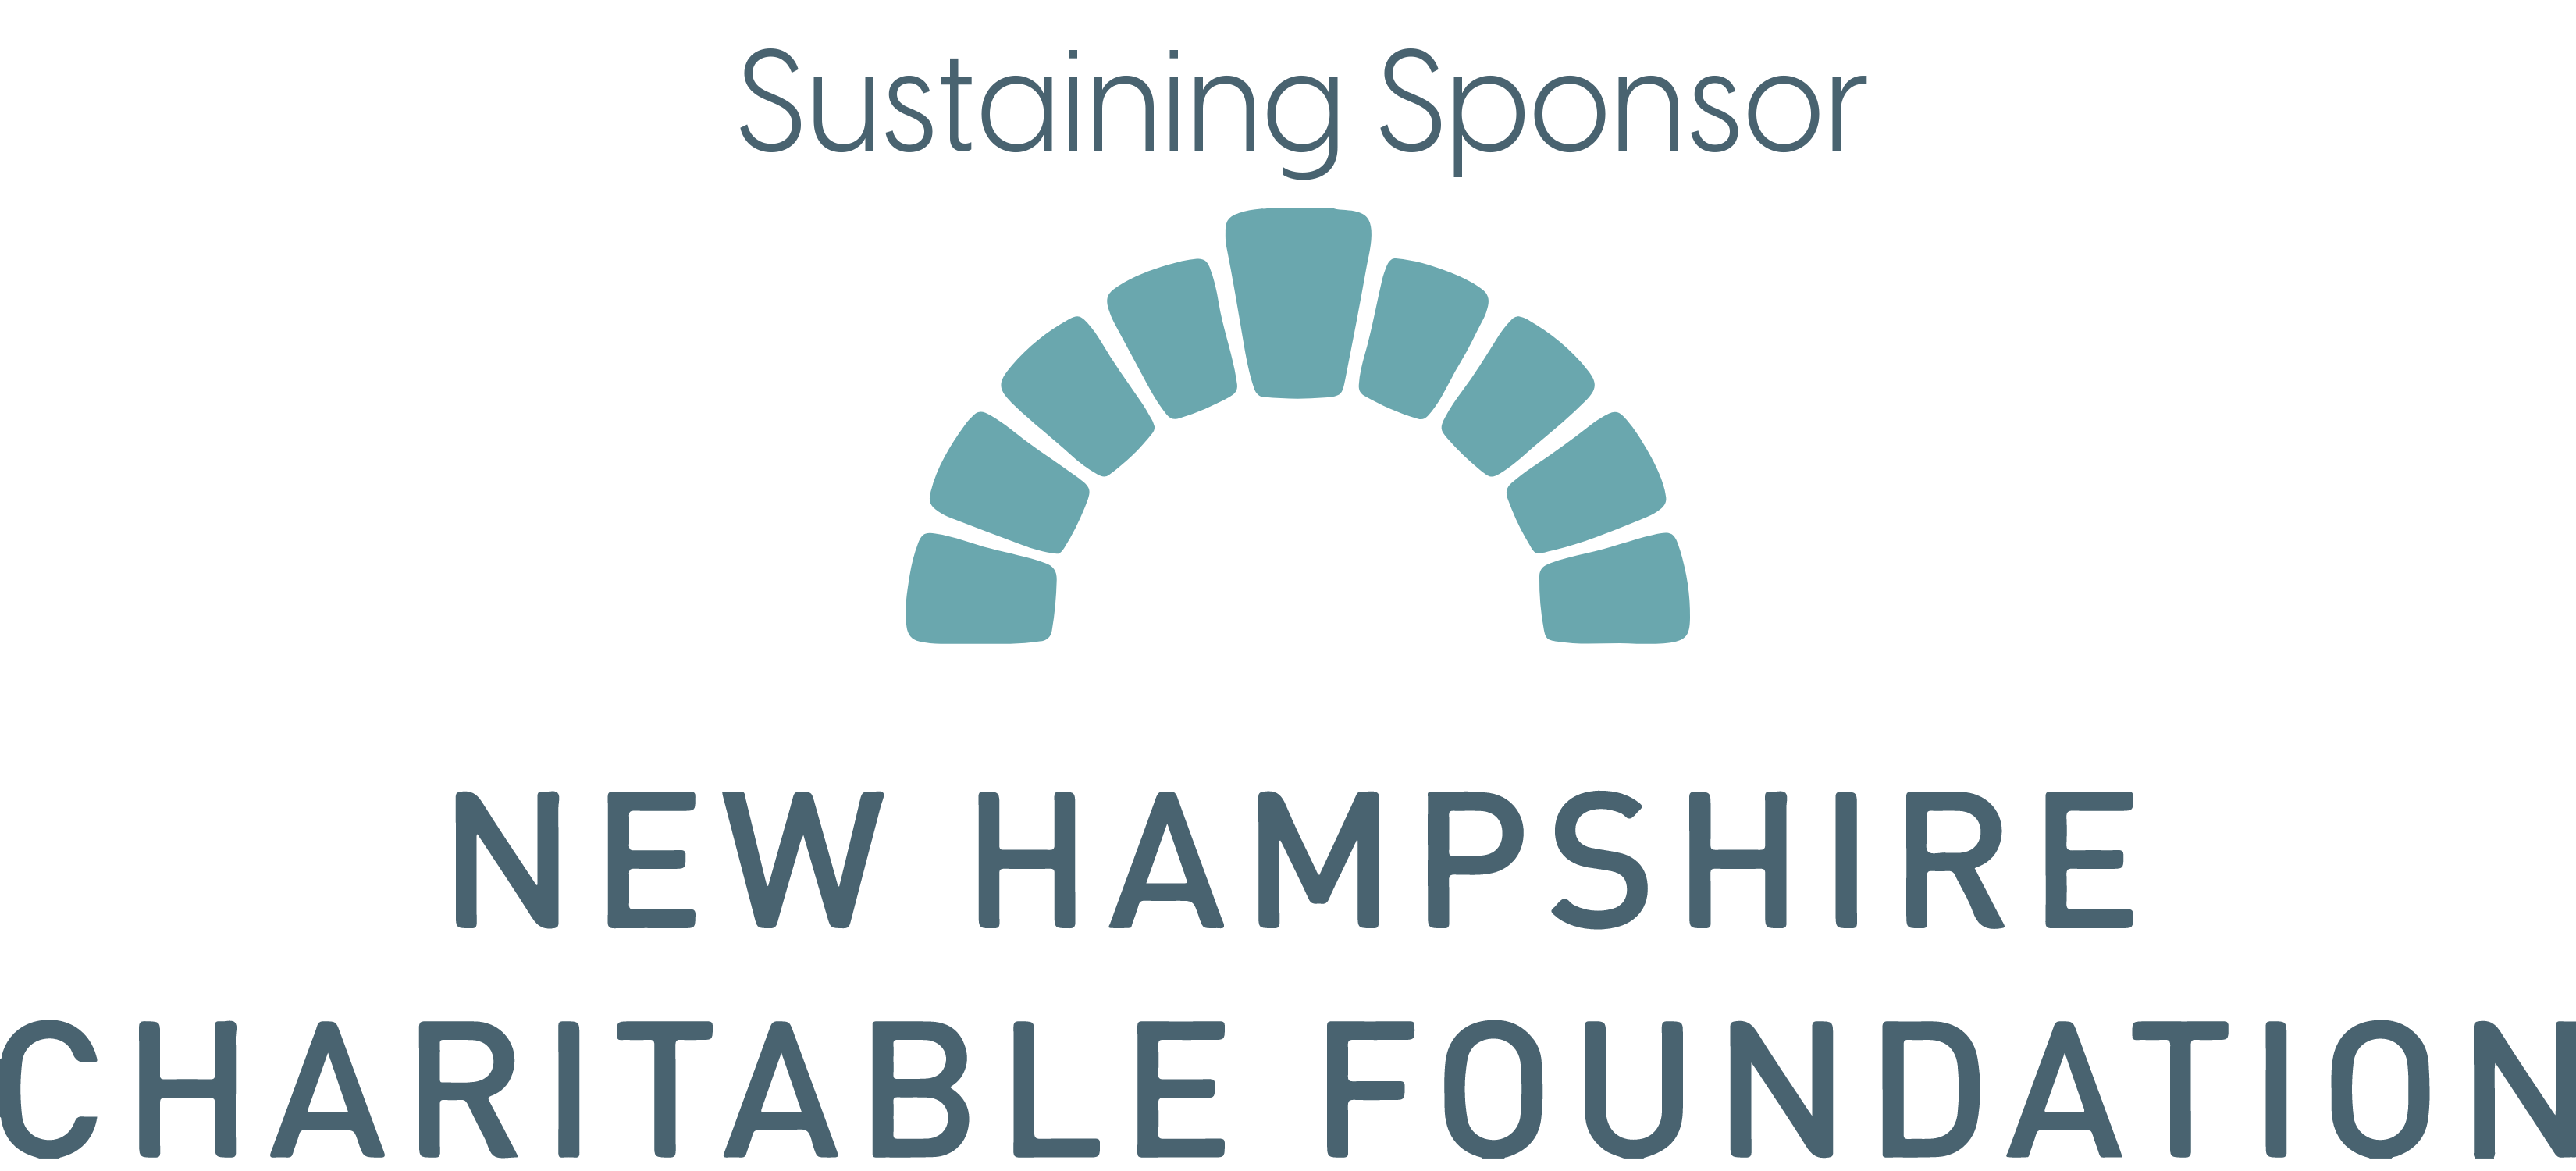 New Hampshire Charitable Foundation logo